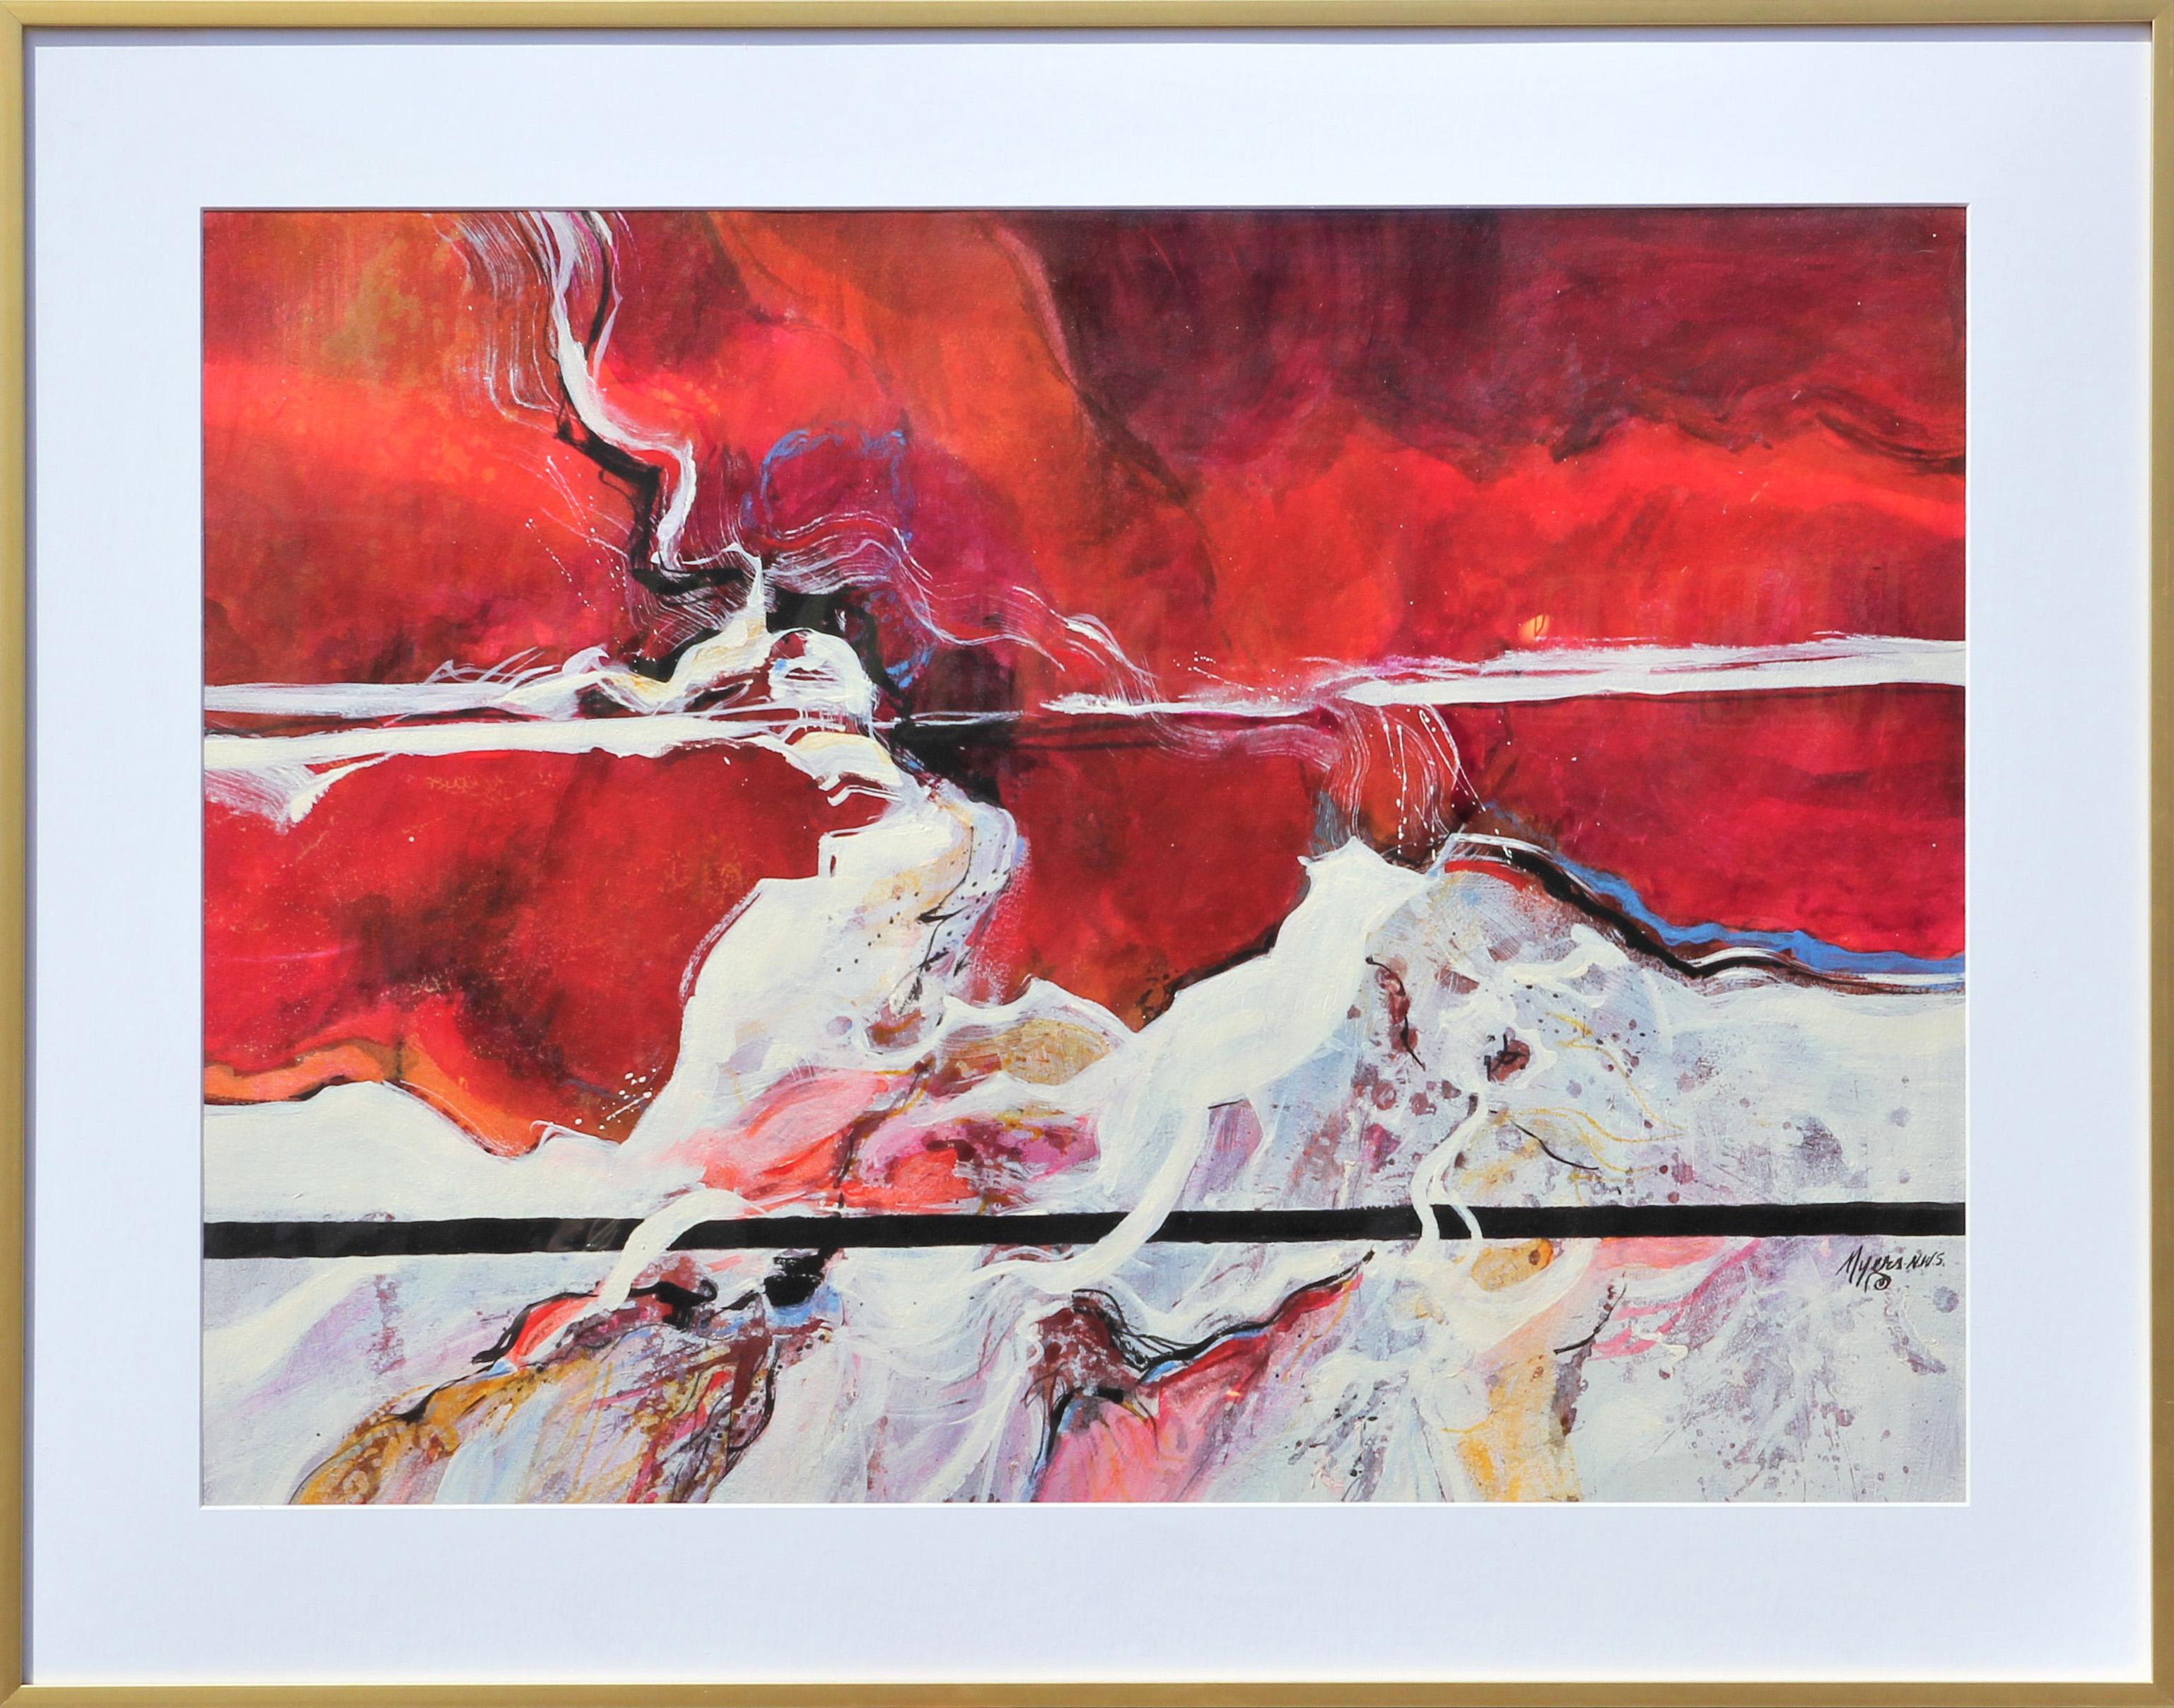 Peinture expressionniste abstraite moderne rouge et blanche "Firedance"